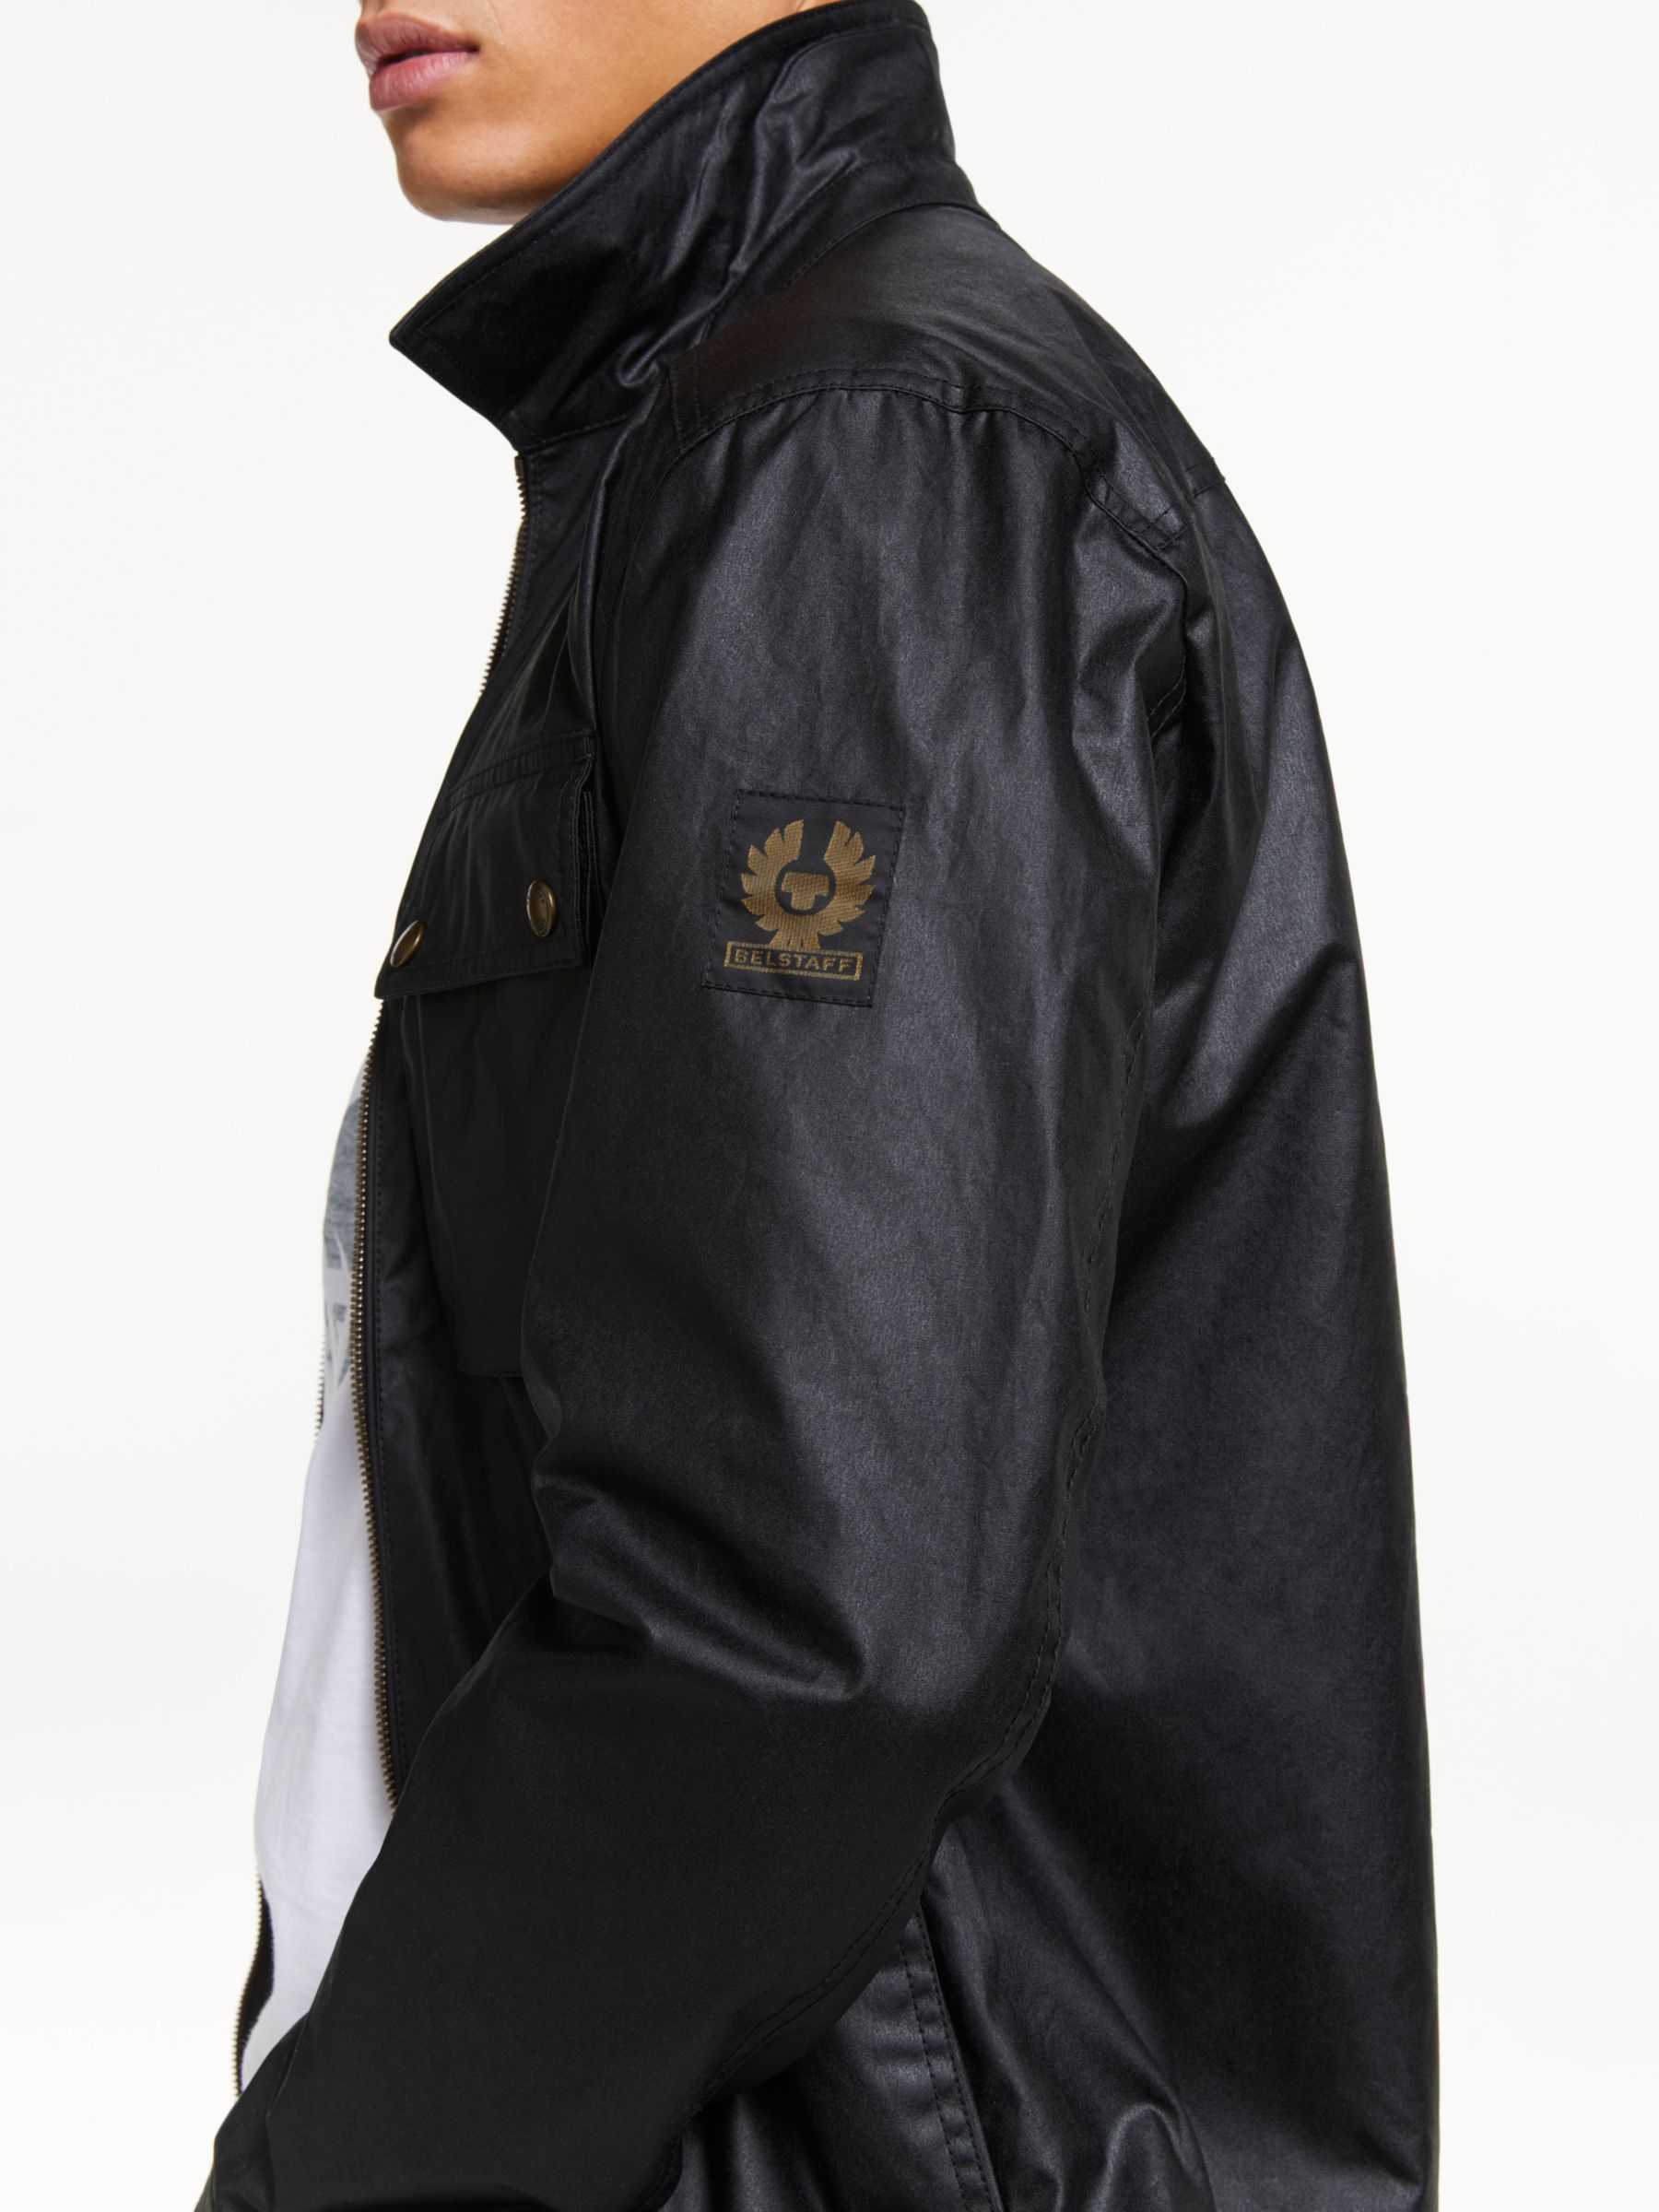 Belstaff Dunstall Jacket, Black at John Lewis & Partners